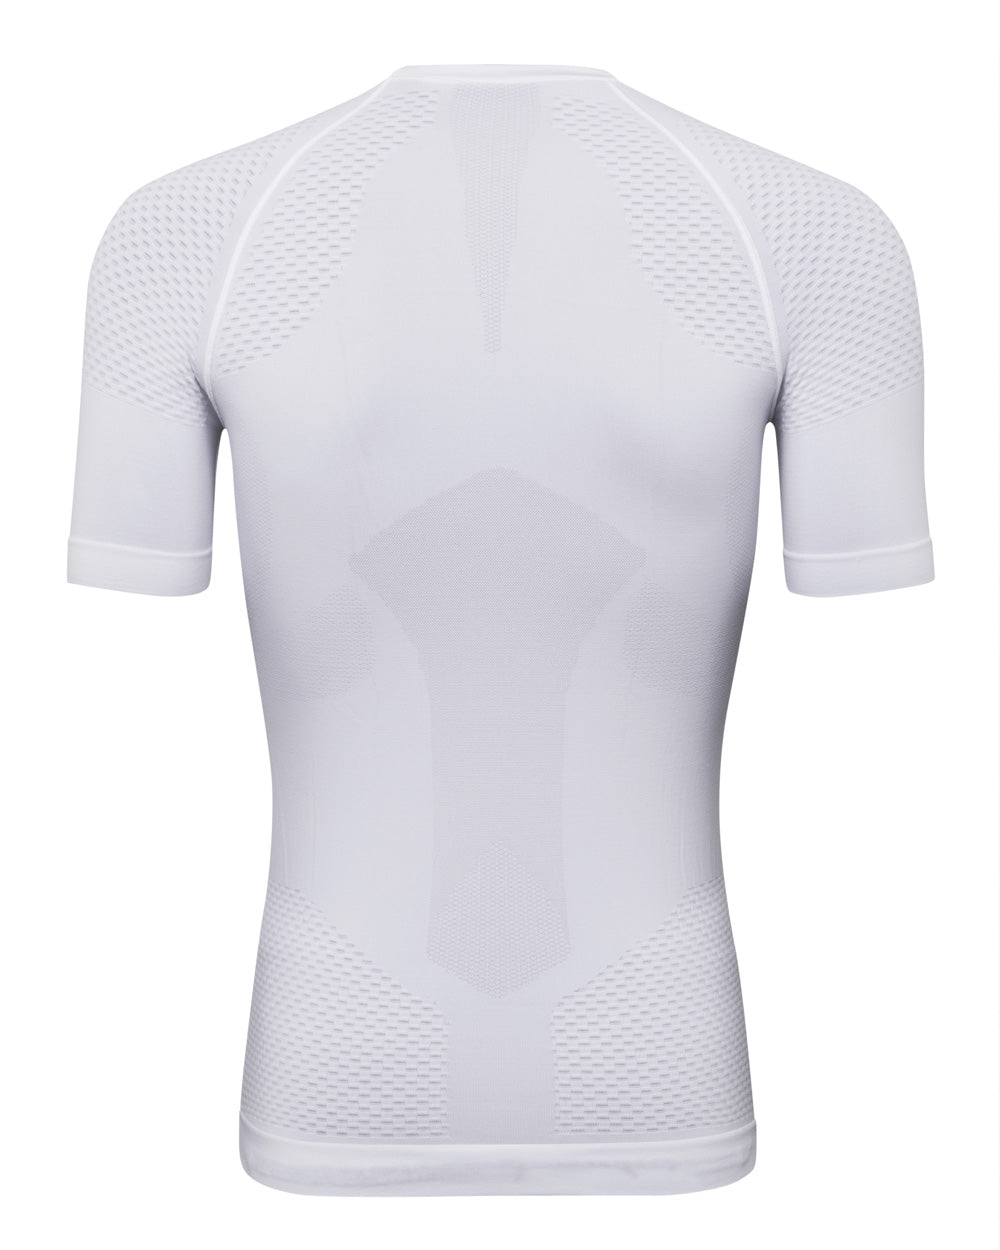 T-shirt FIR man short sleeves - White - Medical Device triloxy